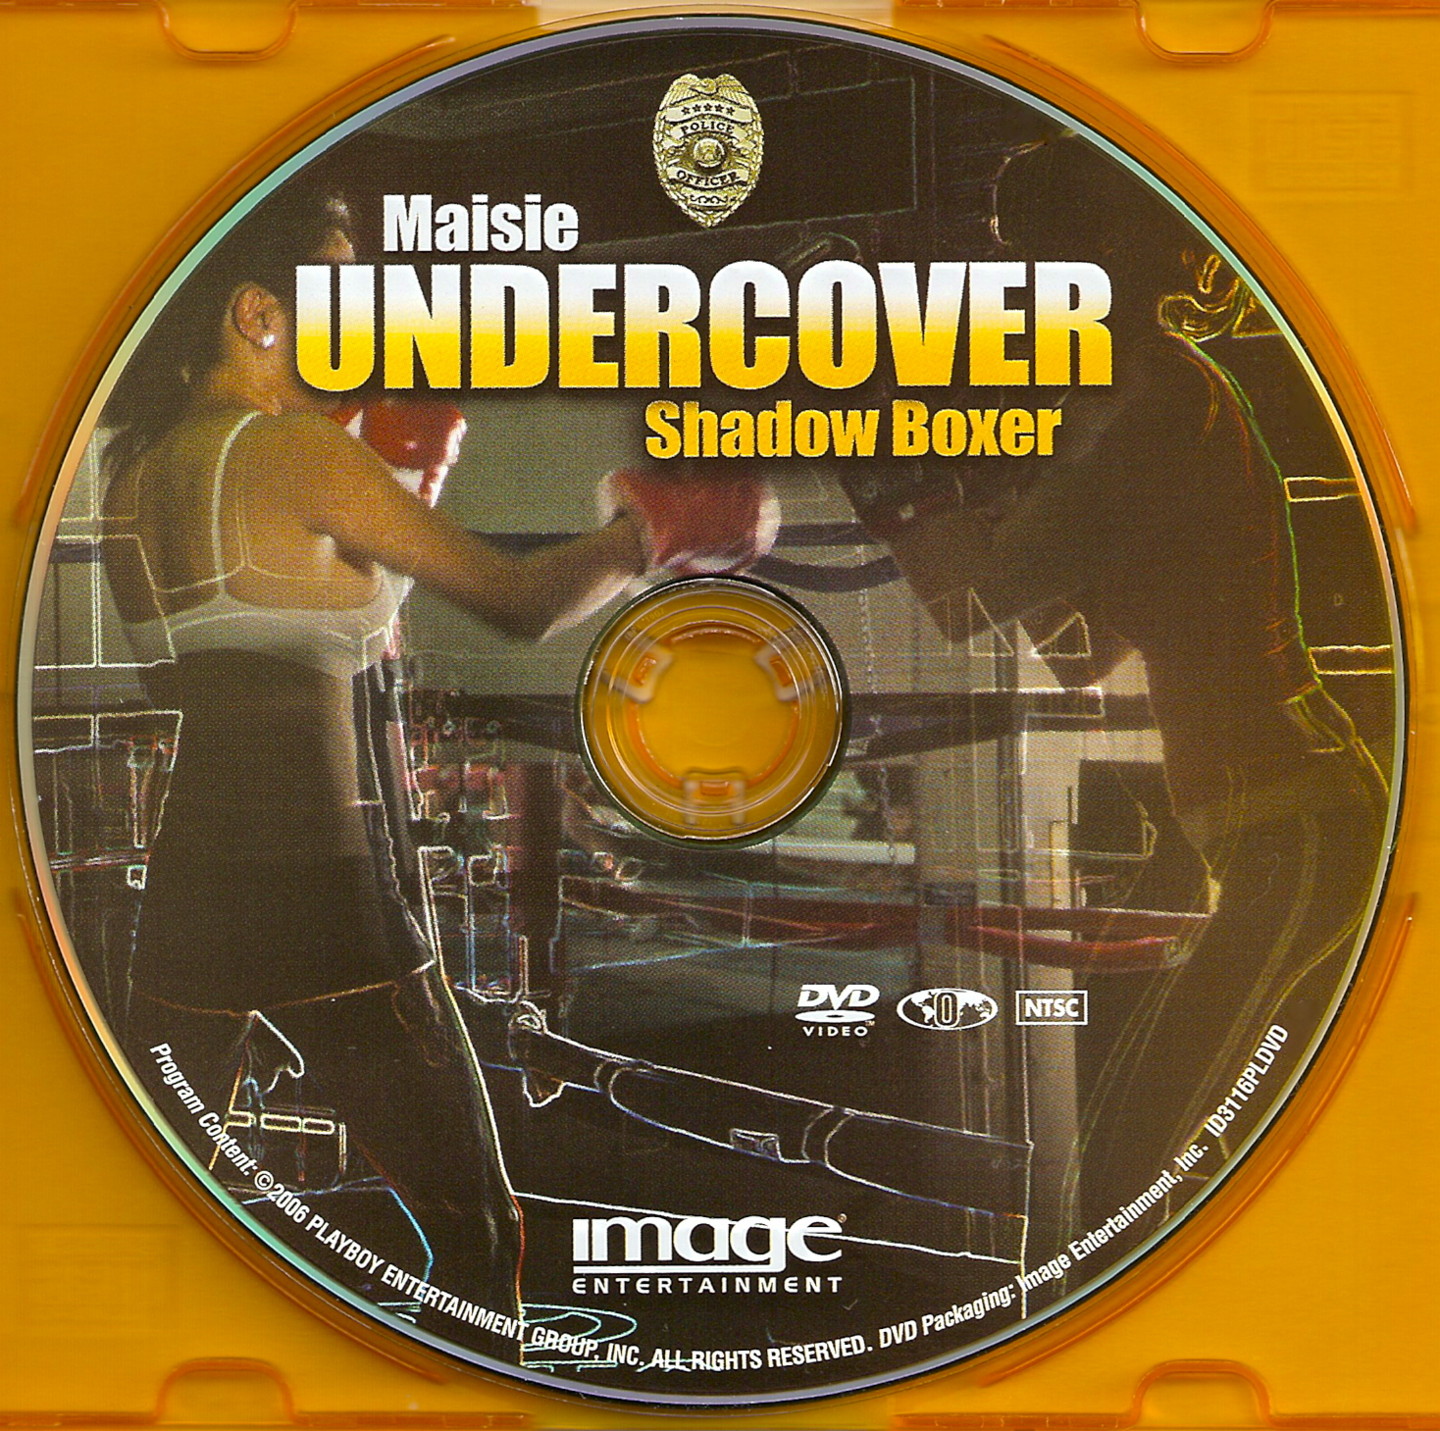 Maisie Undercover Shadow Boxer Telegraph